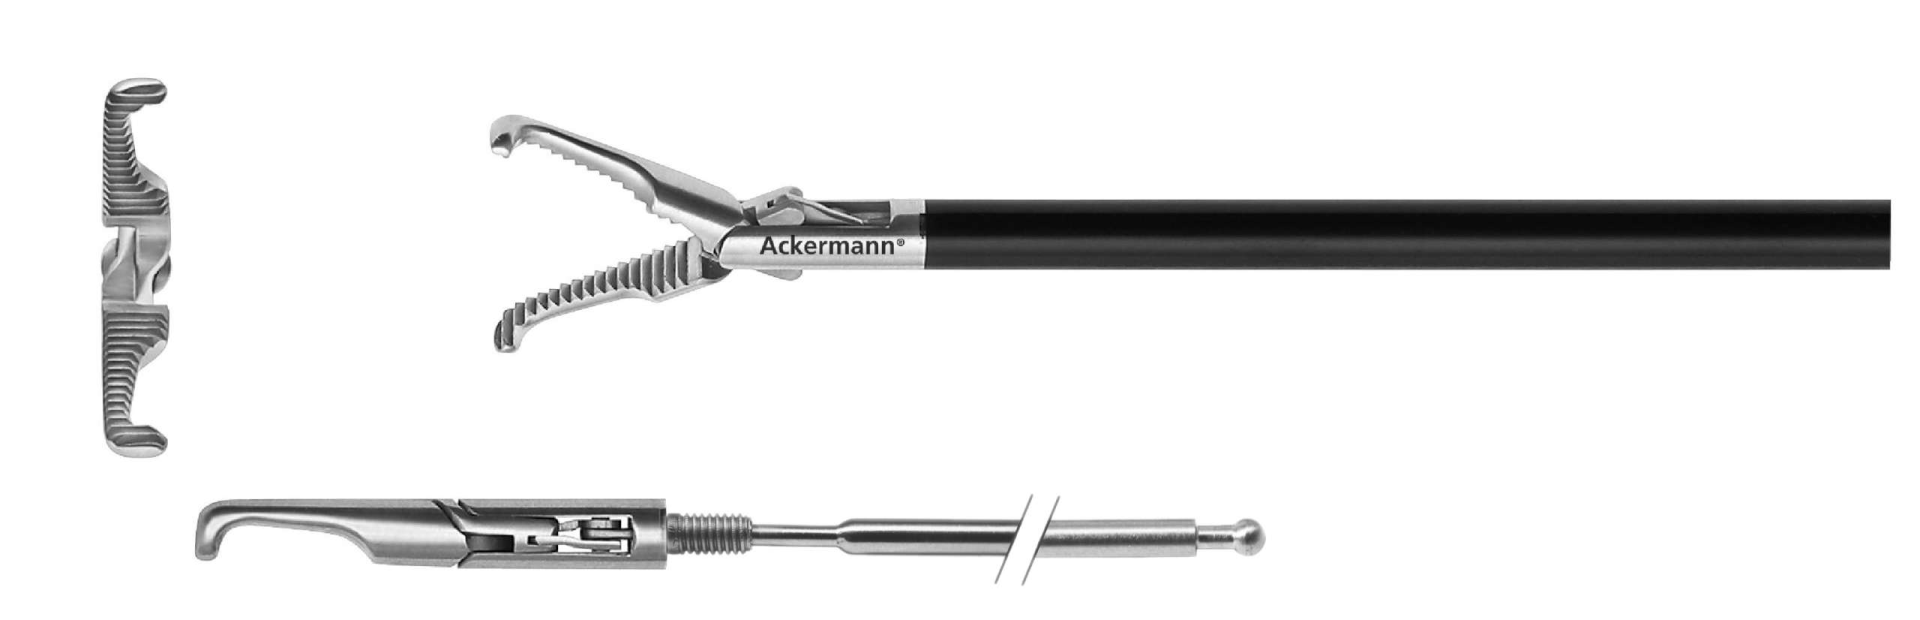 Locamed Ackermann UK distributor, laparoscopic mixter 90deg cross serrated insert